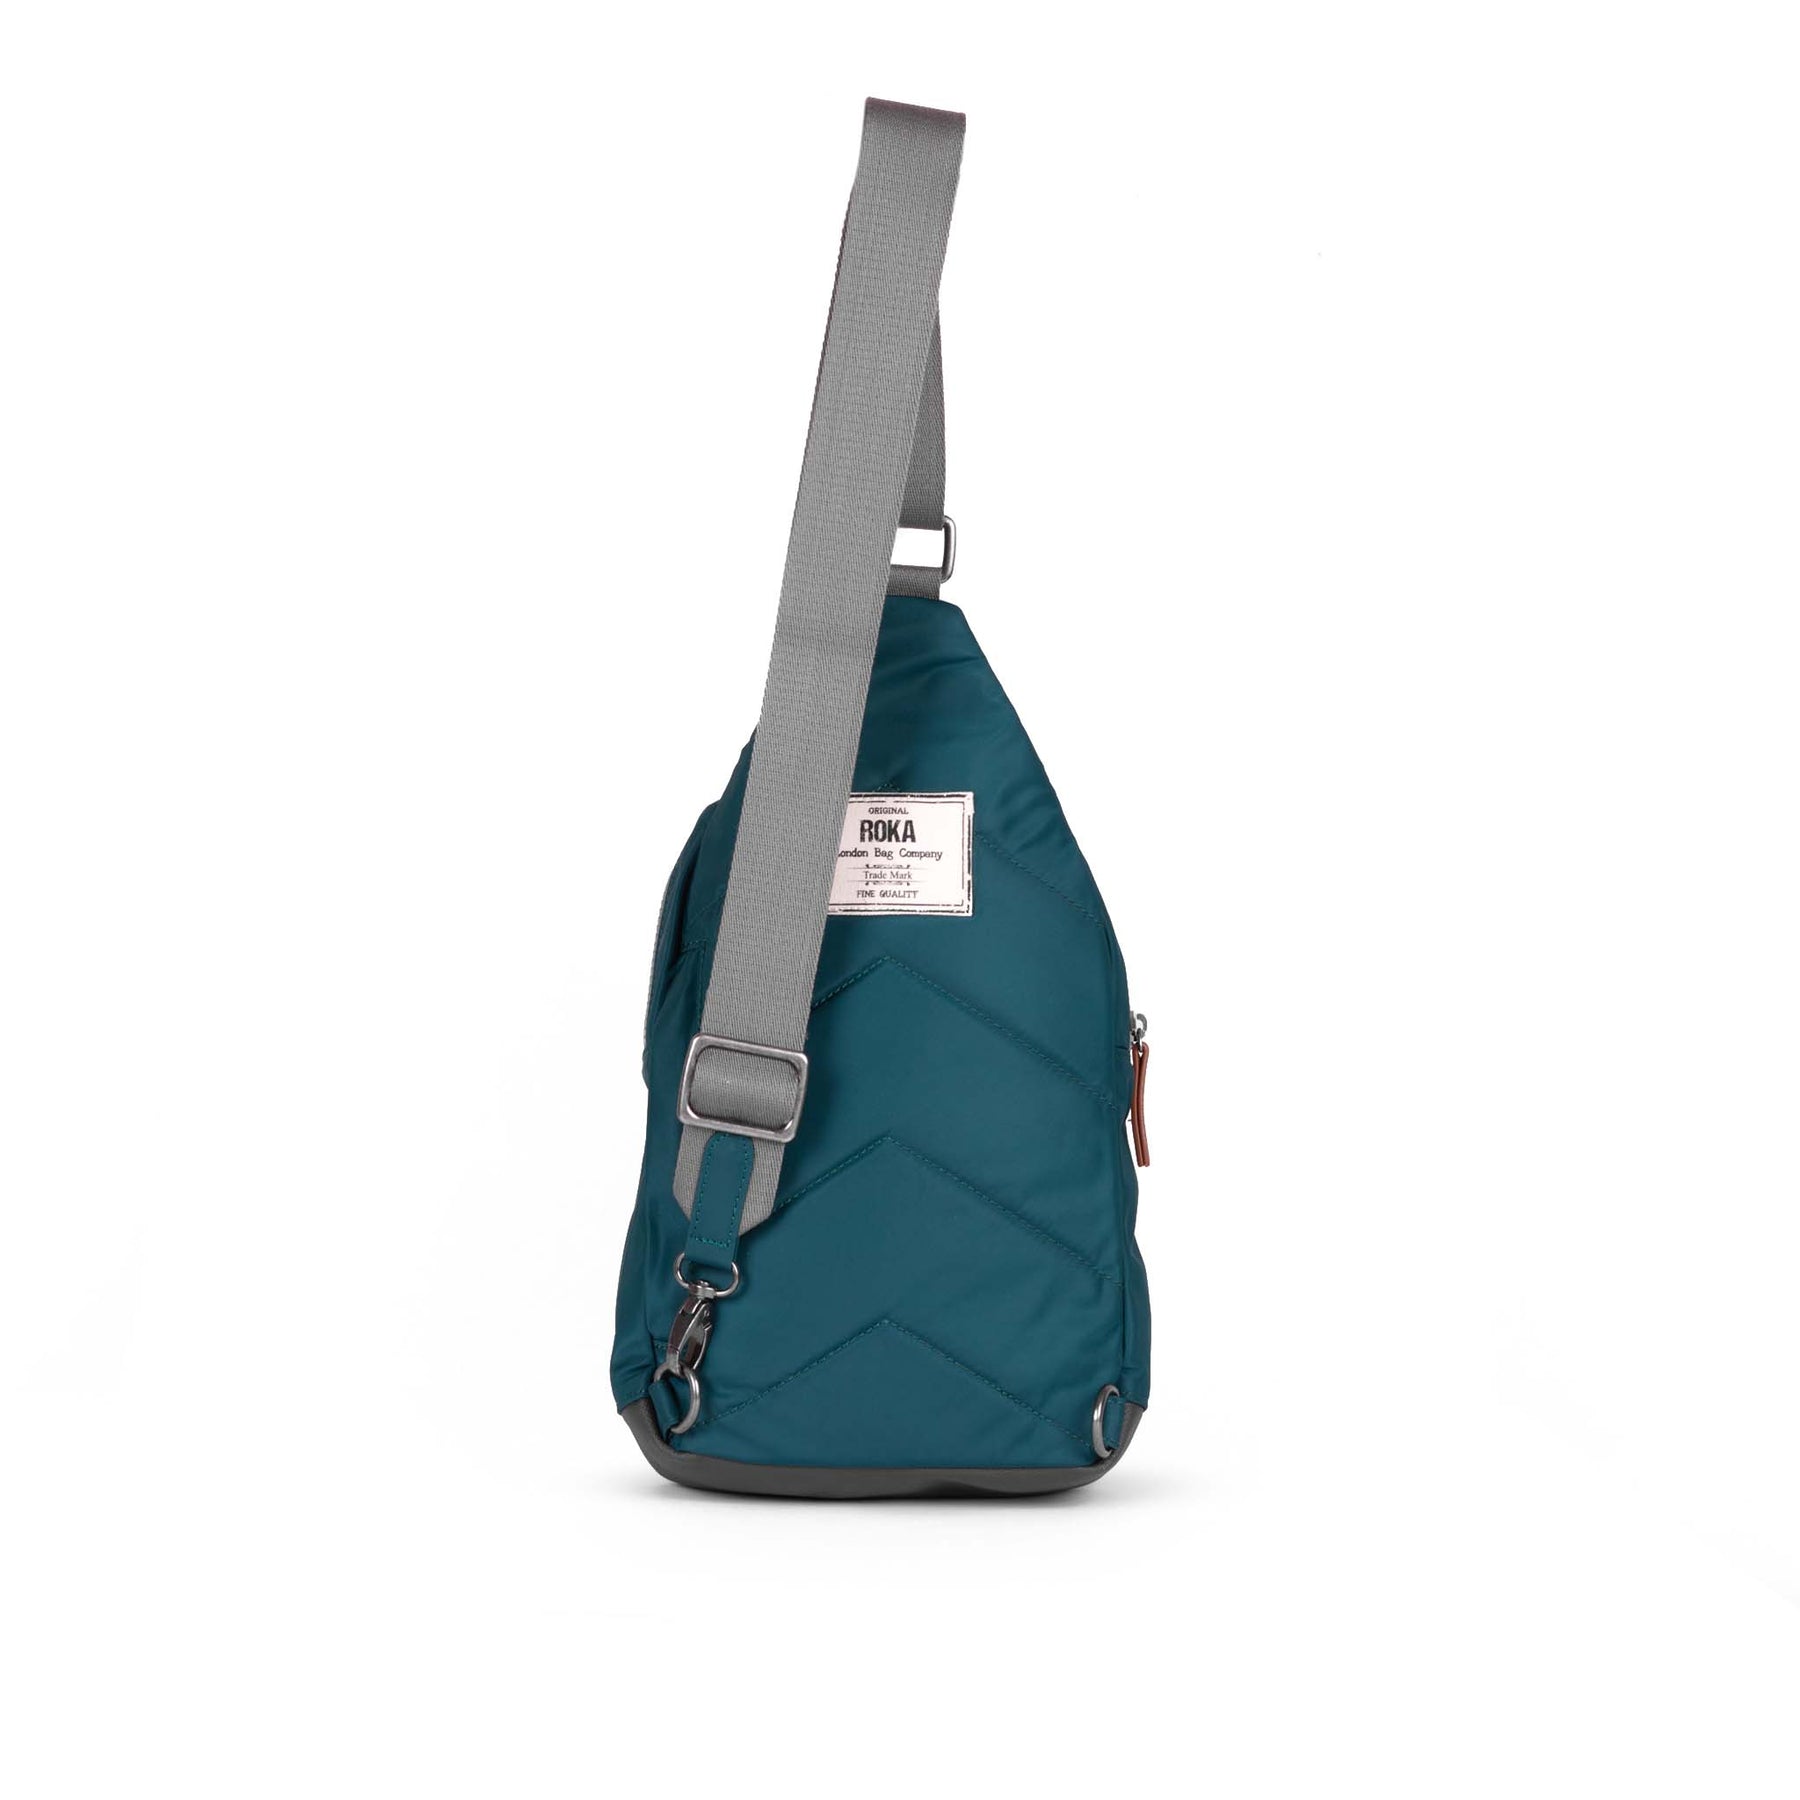 ROKA Willesden B Teal Large Recycled Nylon Bag - OS